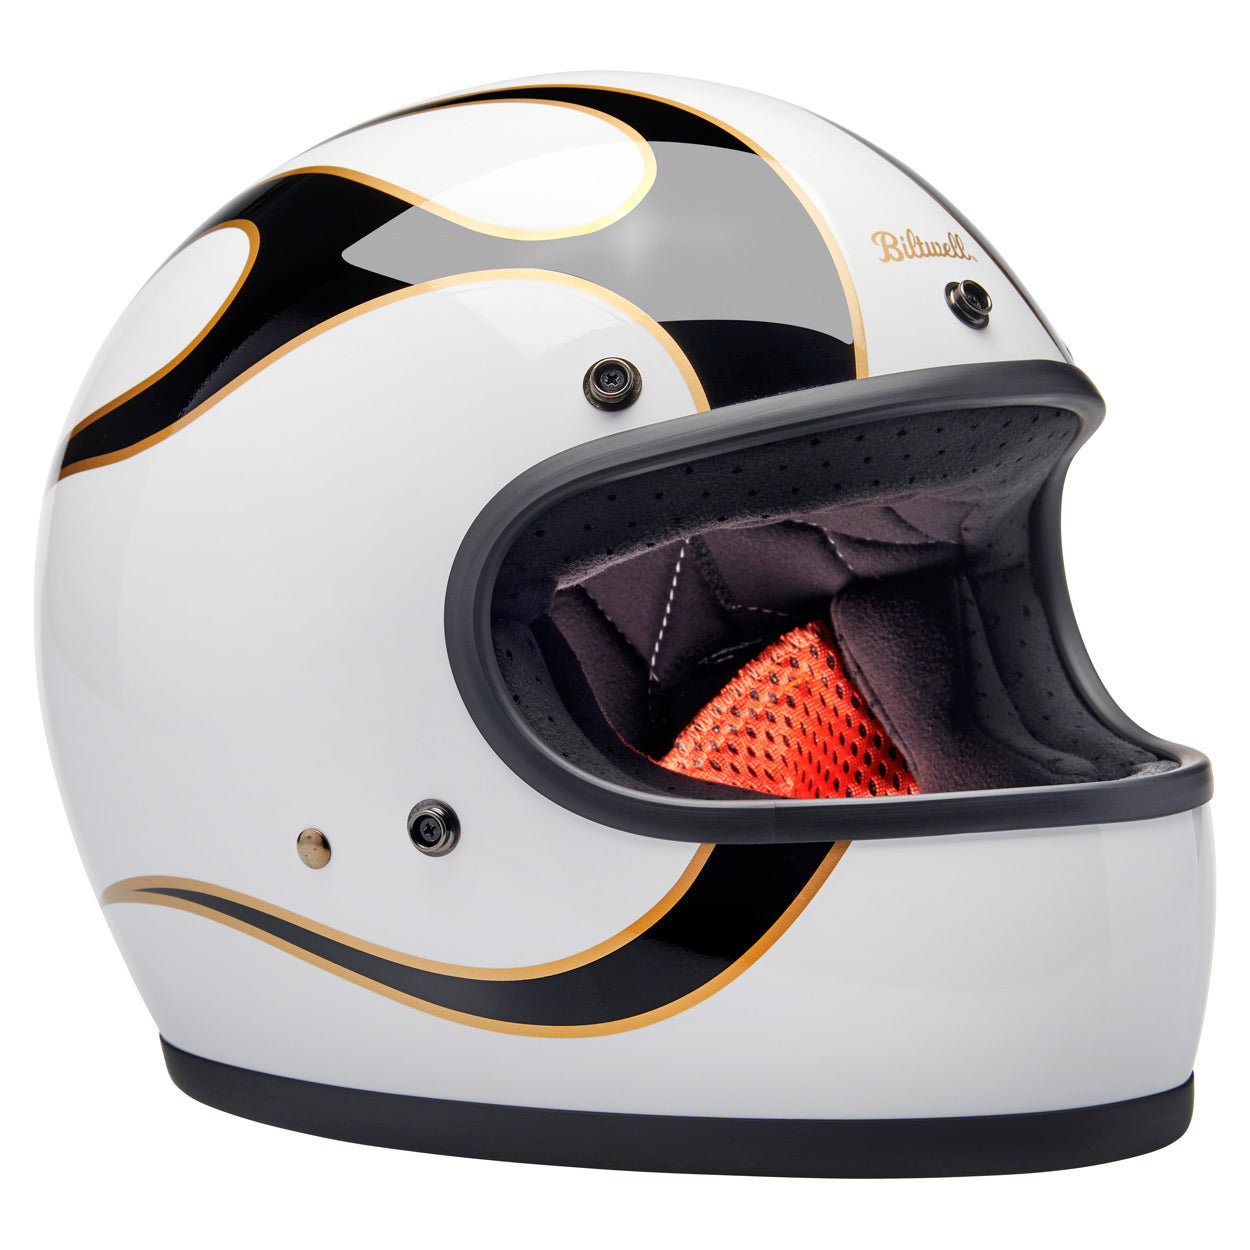 Gringo ECE R22.06 Helmet - Gloss White / Black Flames